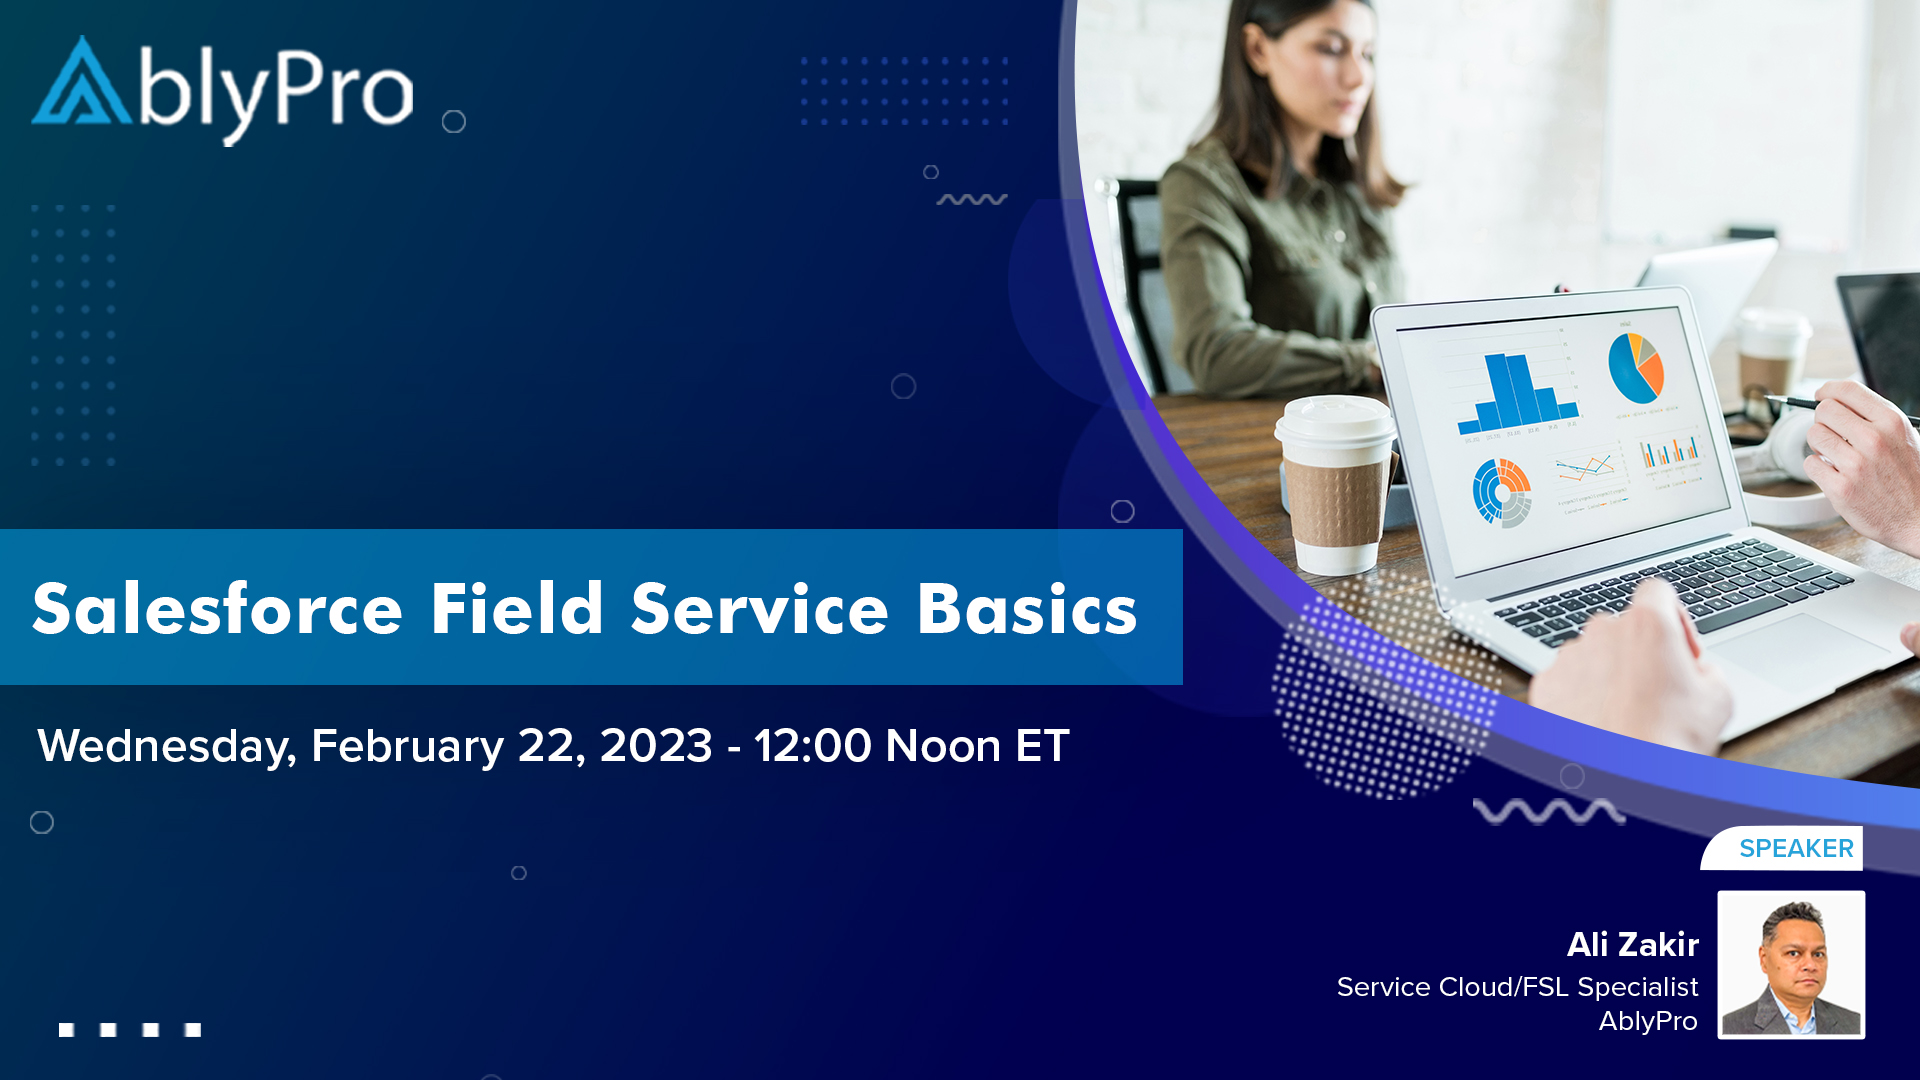 Webinar on: Salesforce Field Service Basics